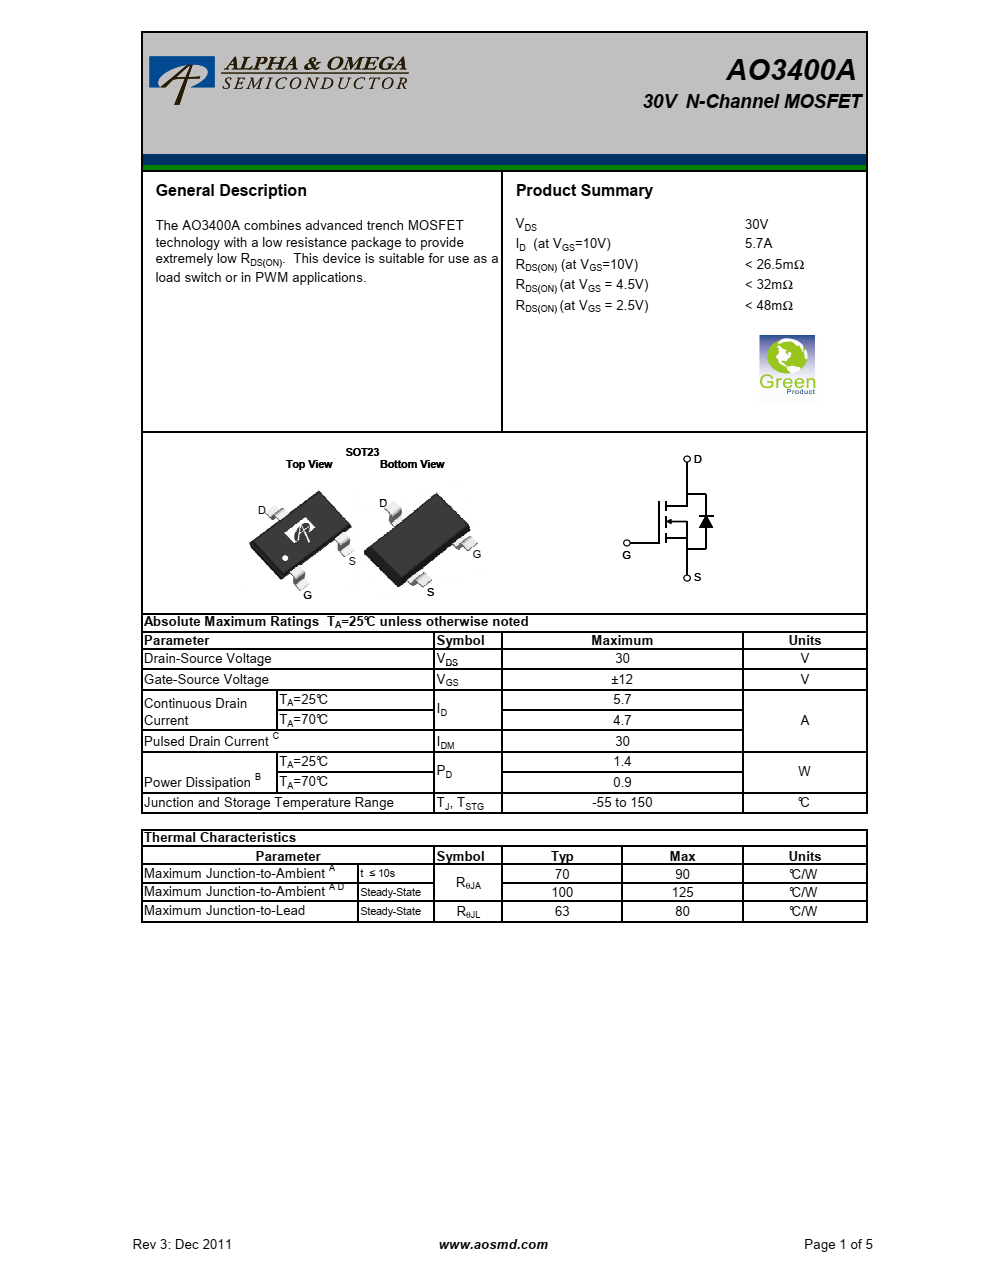 AO3400A将先进的沟槽MOSFET技术与低电阻封装相结合，提供极低的RDS（ON）